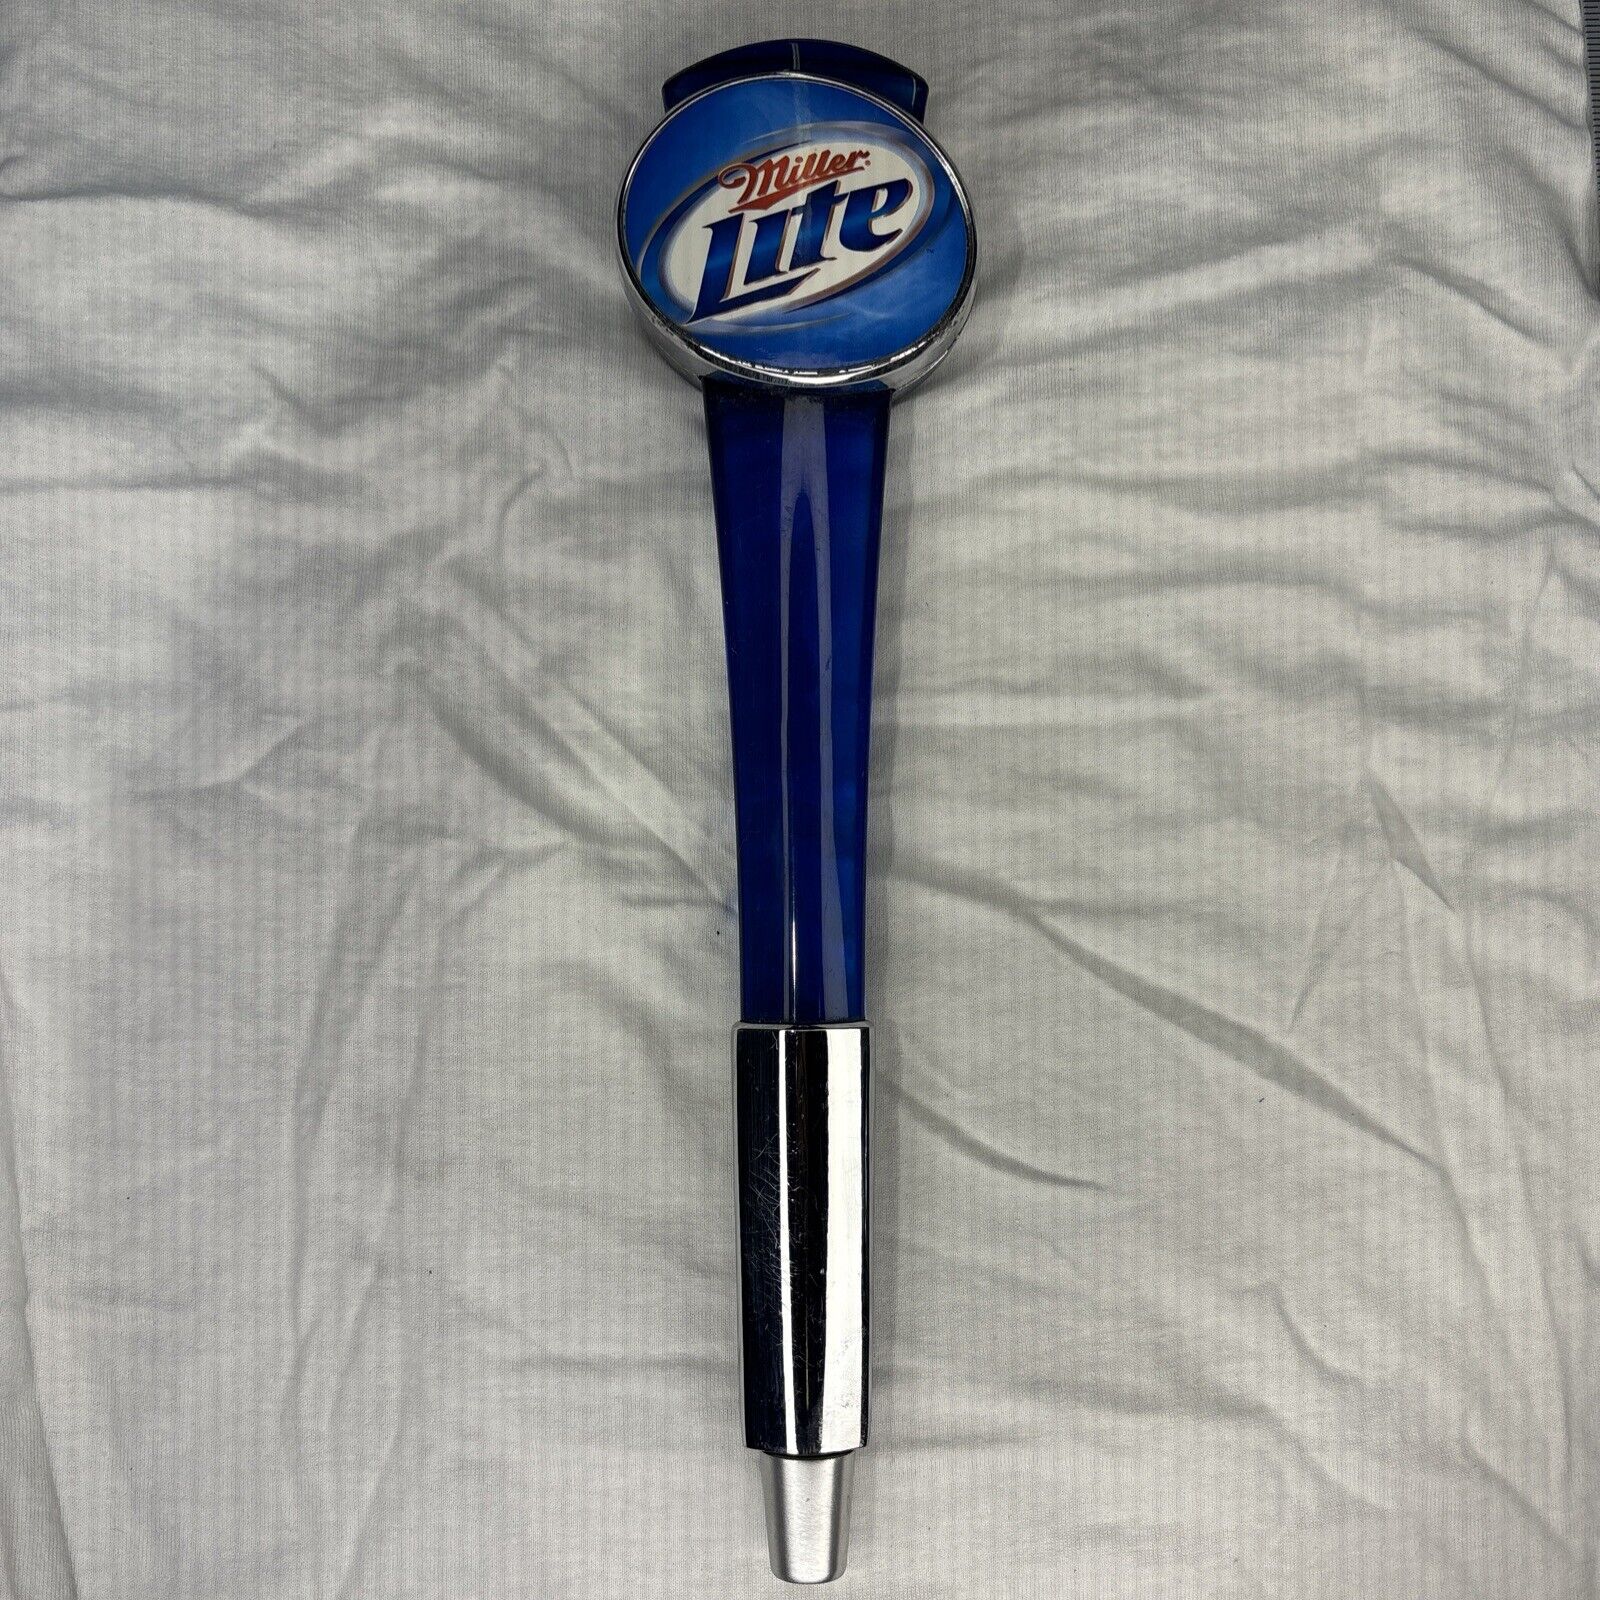 Miller Lite Blue Light Blue beer tap handle Read Description Double Sided